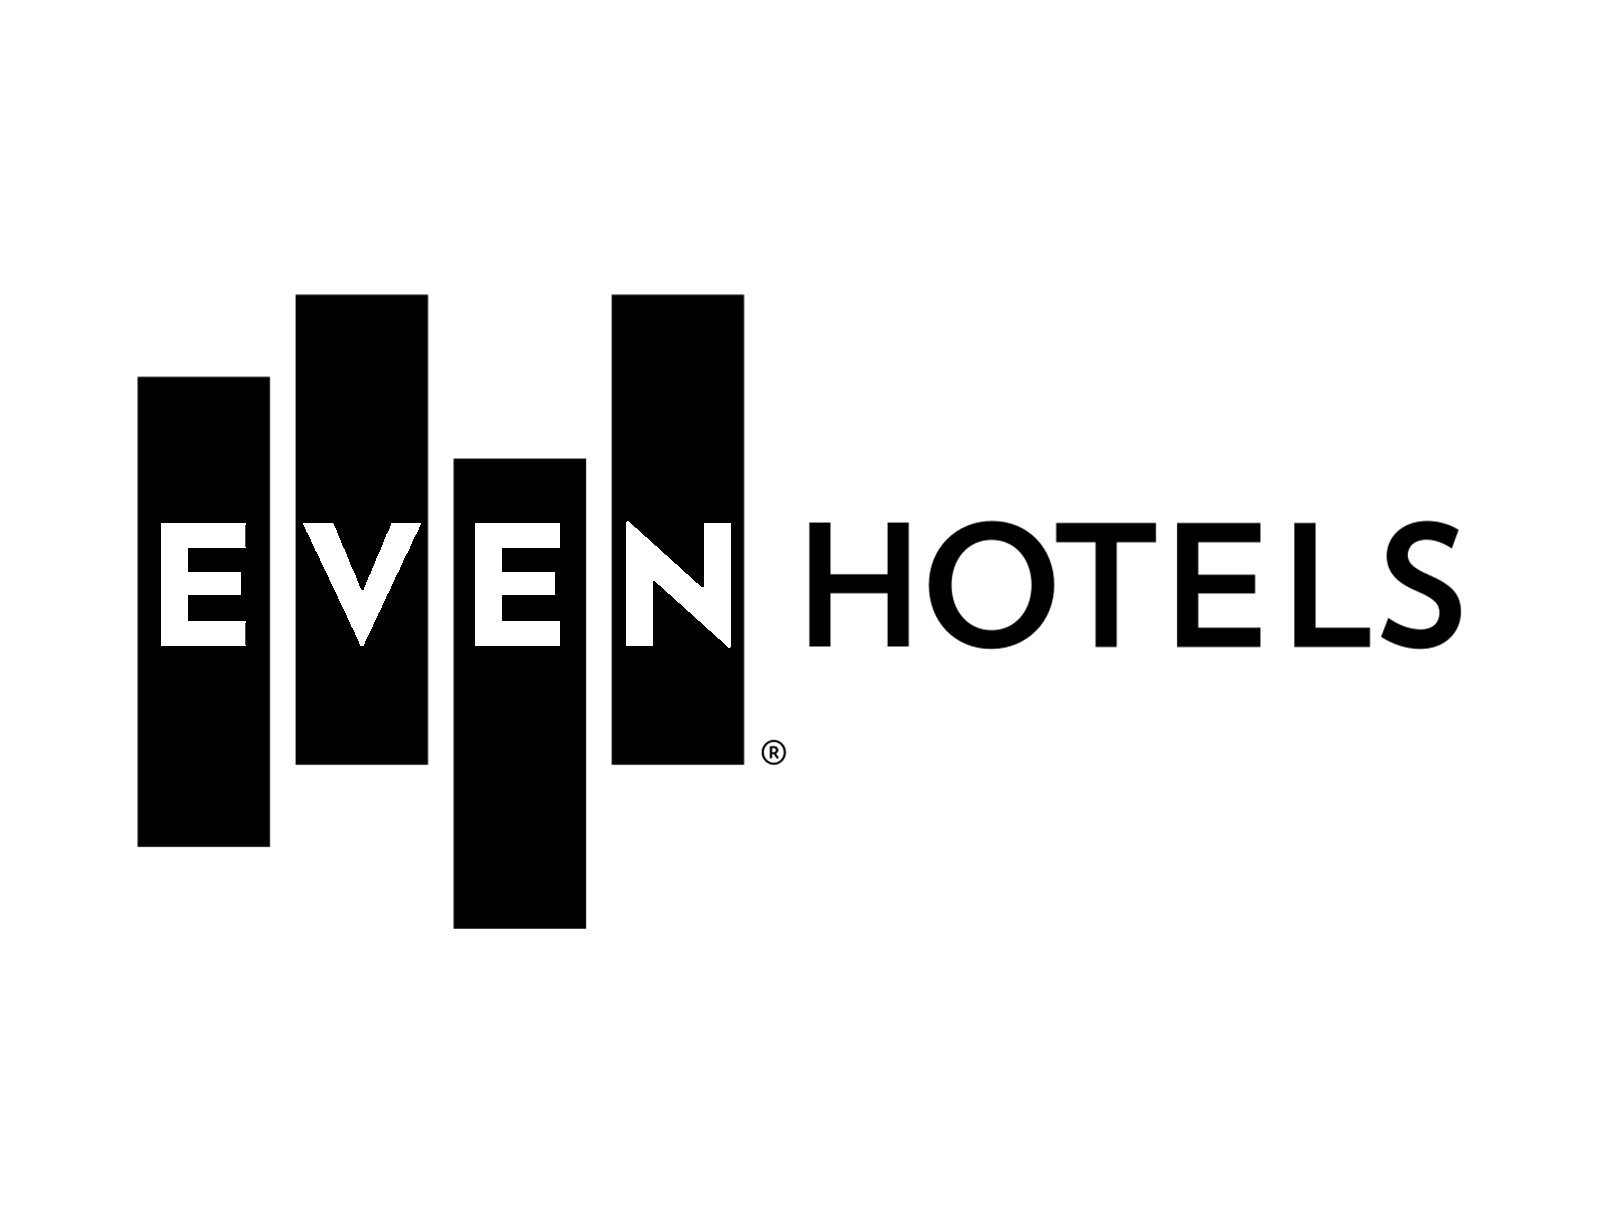 Even Hotels Logo.jpg